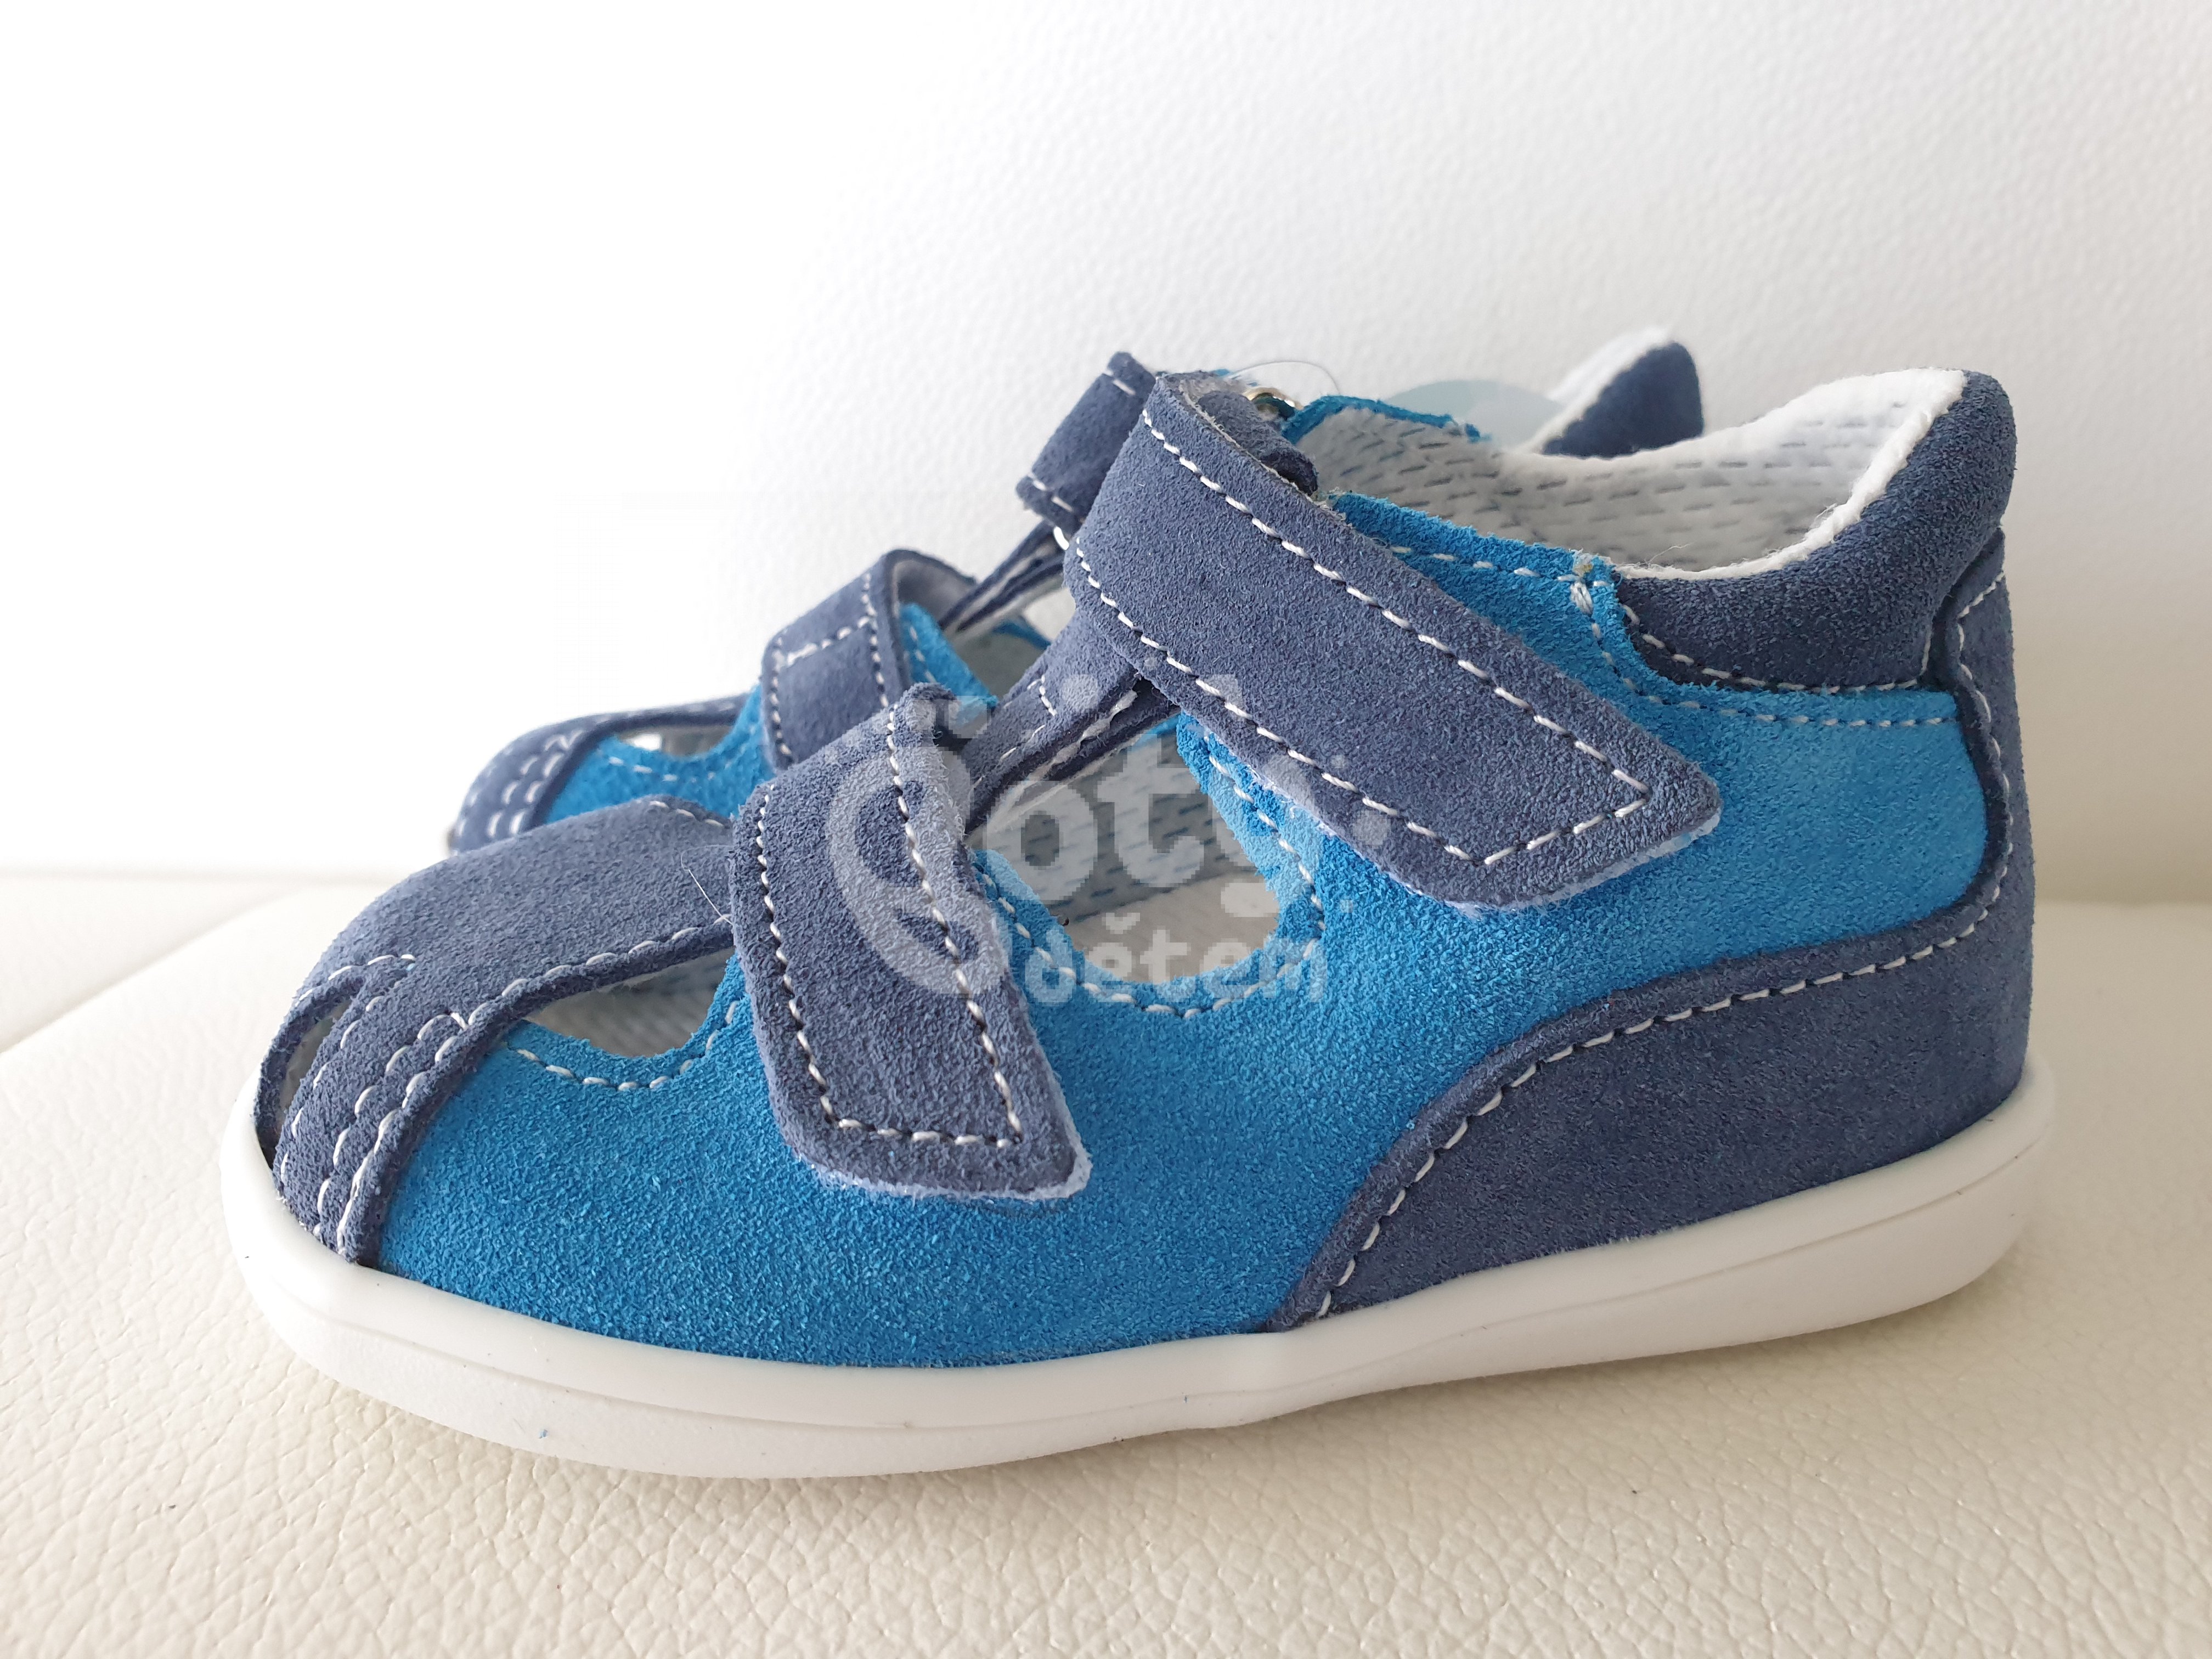 Jonap kožené sandálky 041 S modrá tyrkys